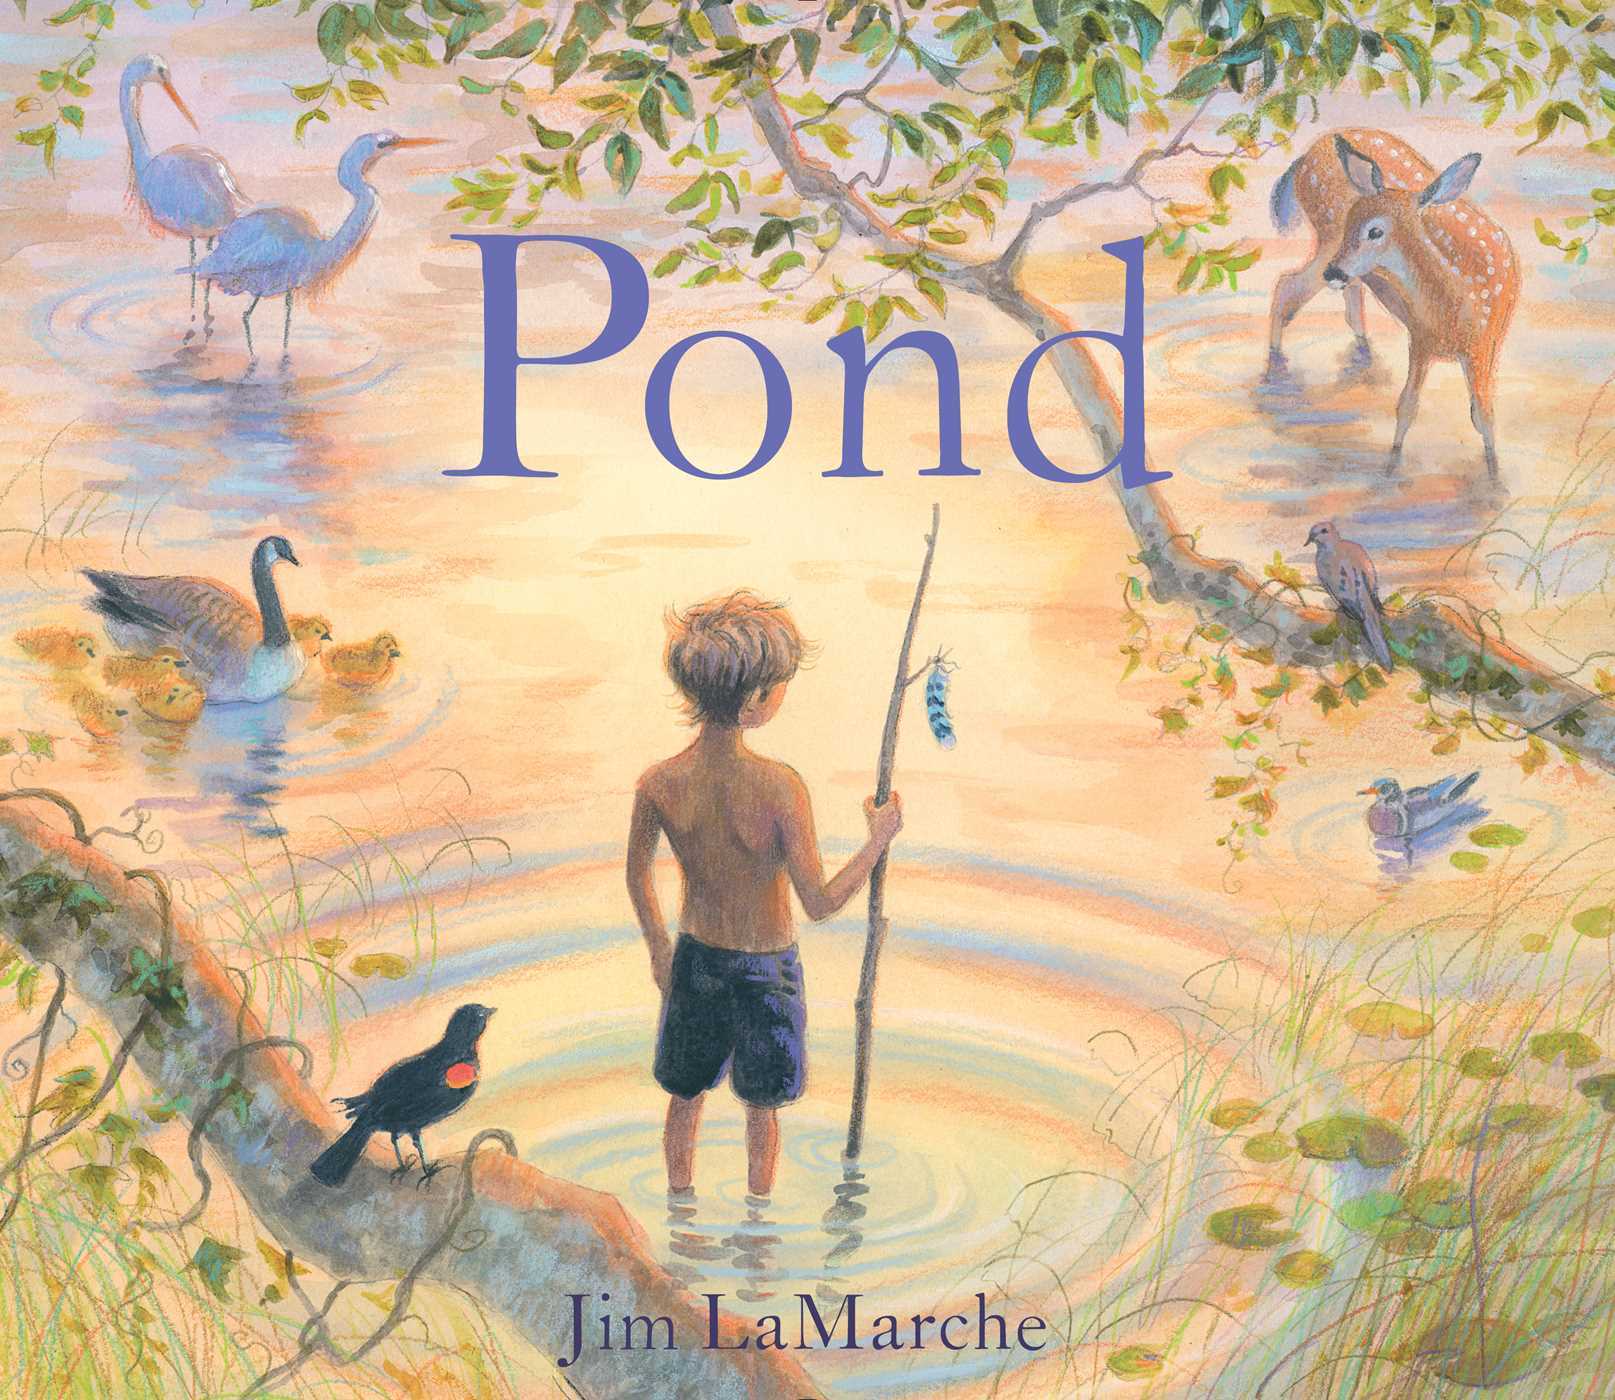 Image for "Pond"